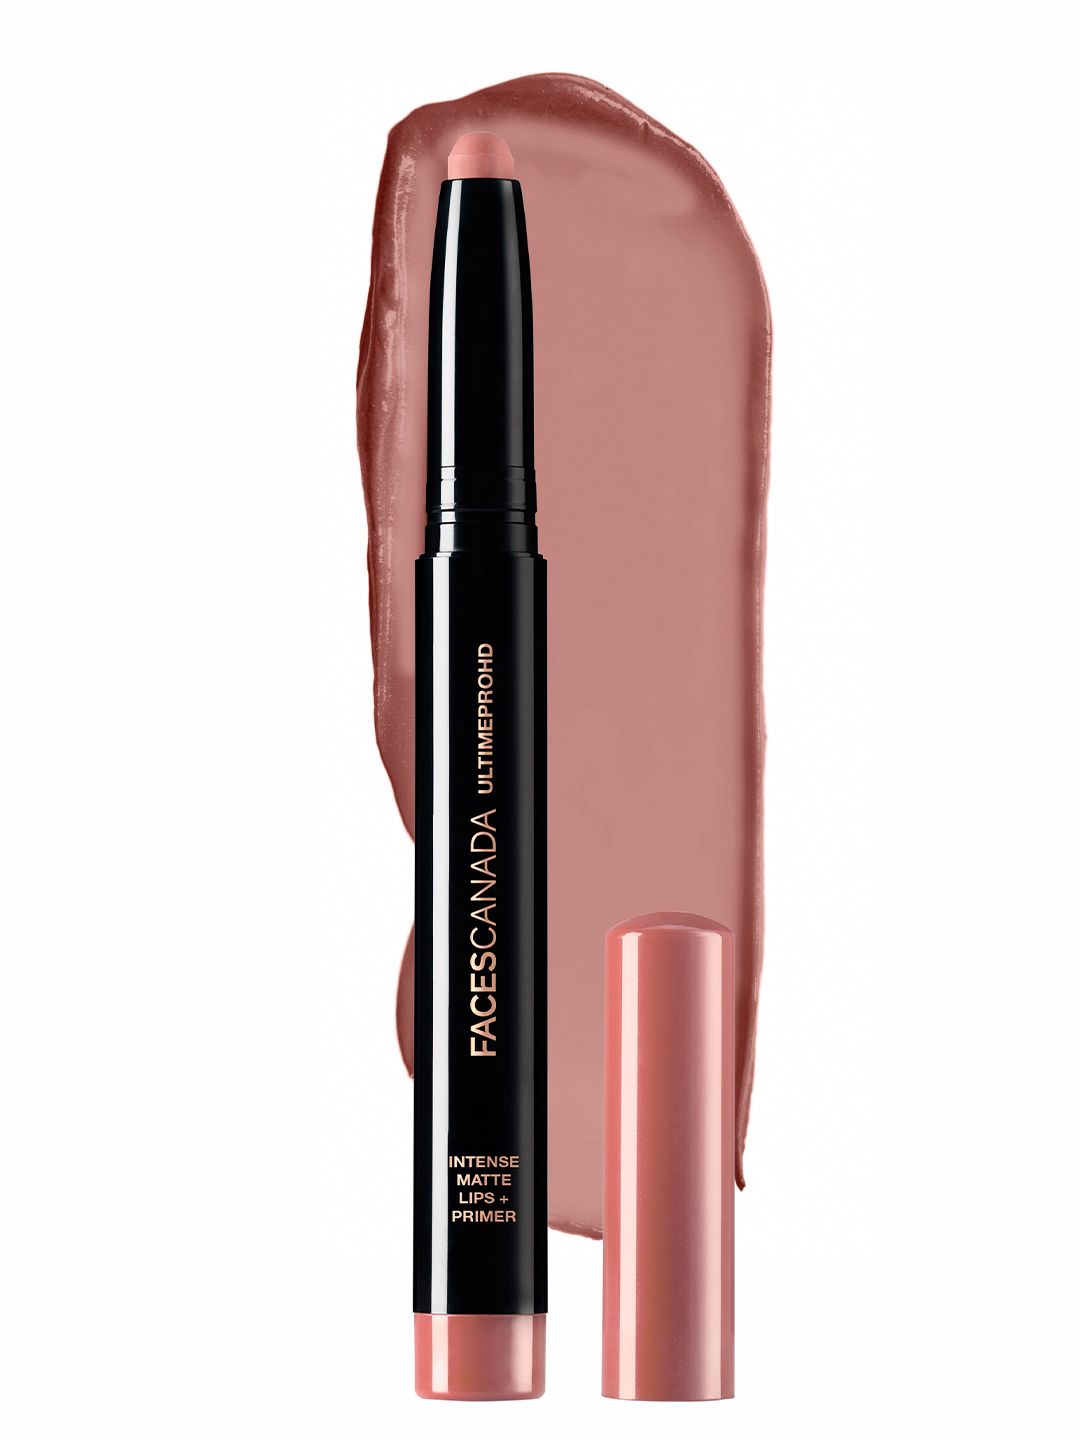 Faces Canada HD Intense Matte Ultra Light-weight Lipstick Hazel 1.4g Price in India